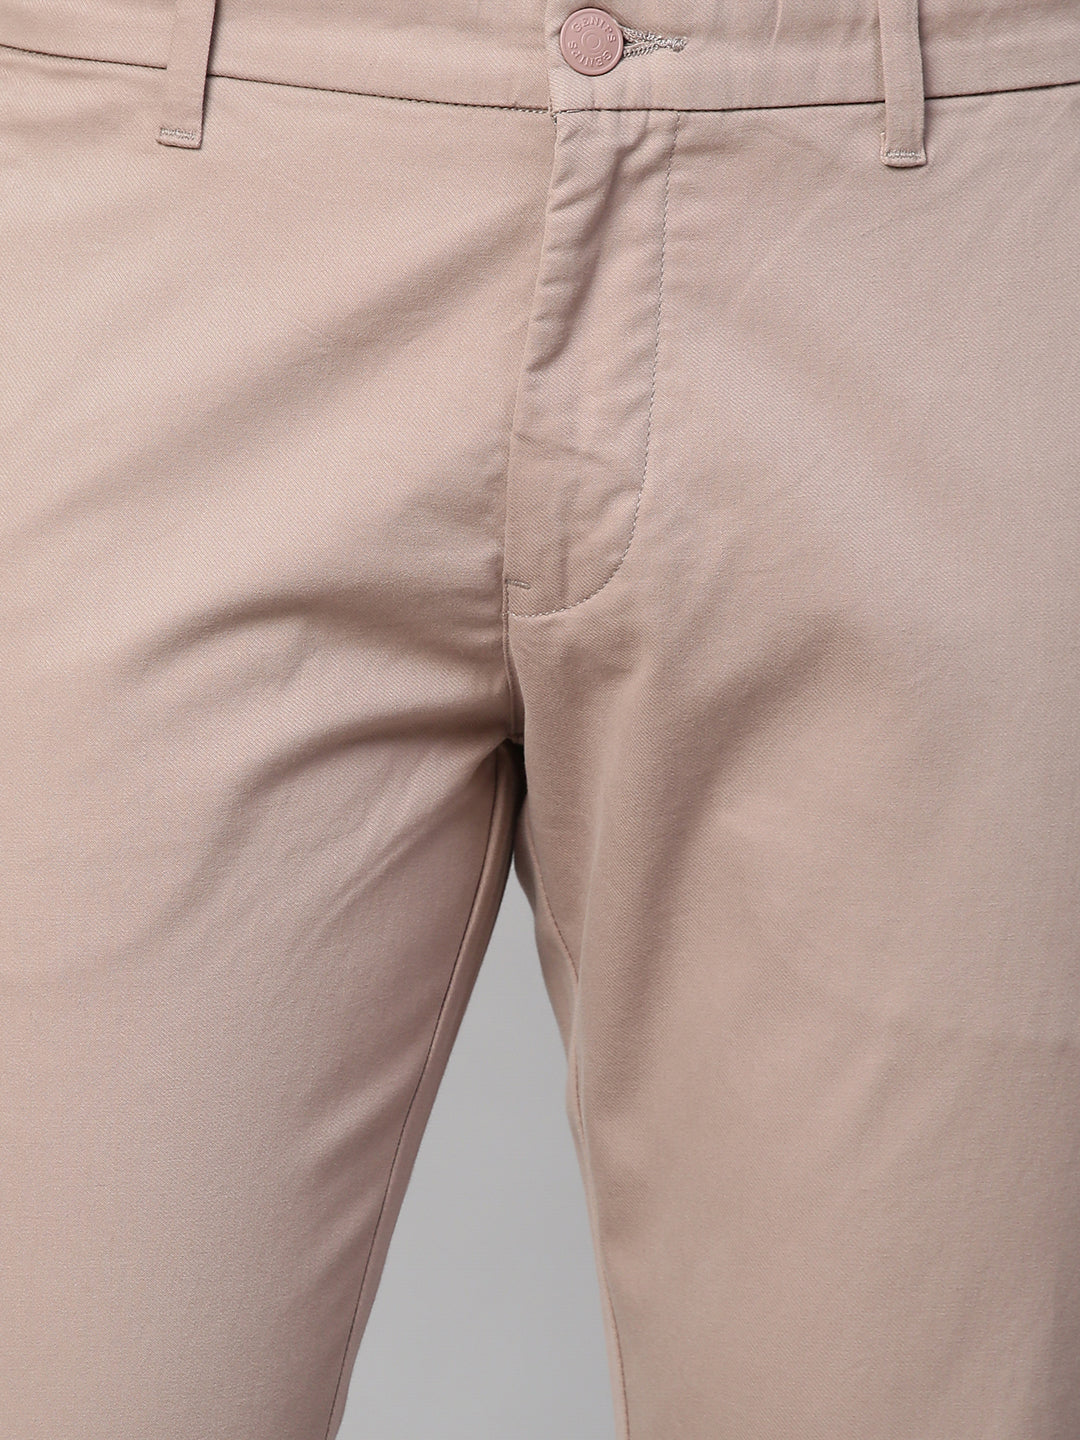 Genips Men's Onion Cotton Stretch Caribbean Slim Fit Solid Trousers